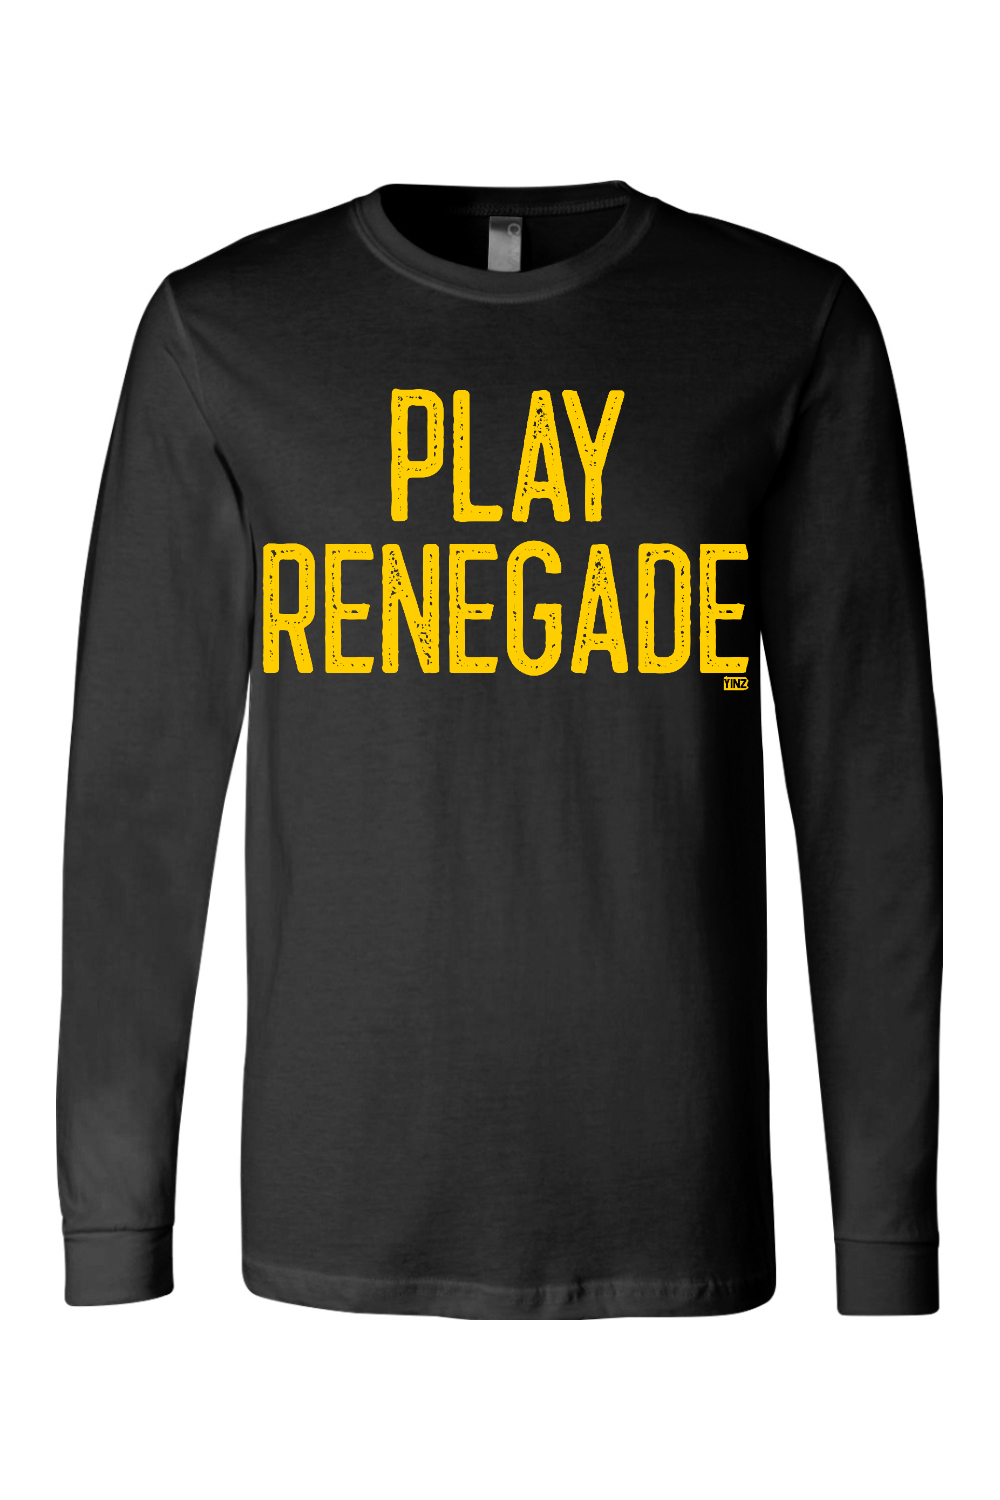 Play Renegade - BELLA + CANVAS Unisex Jersey Long Sleeve Tee - Yinzylvania